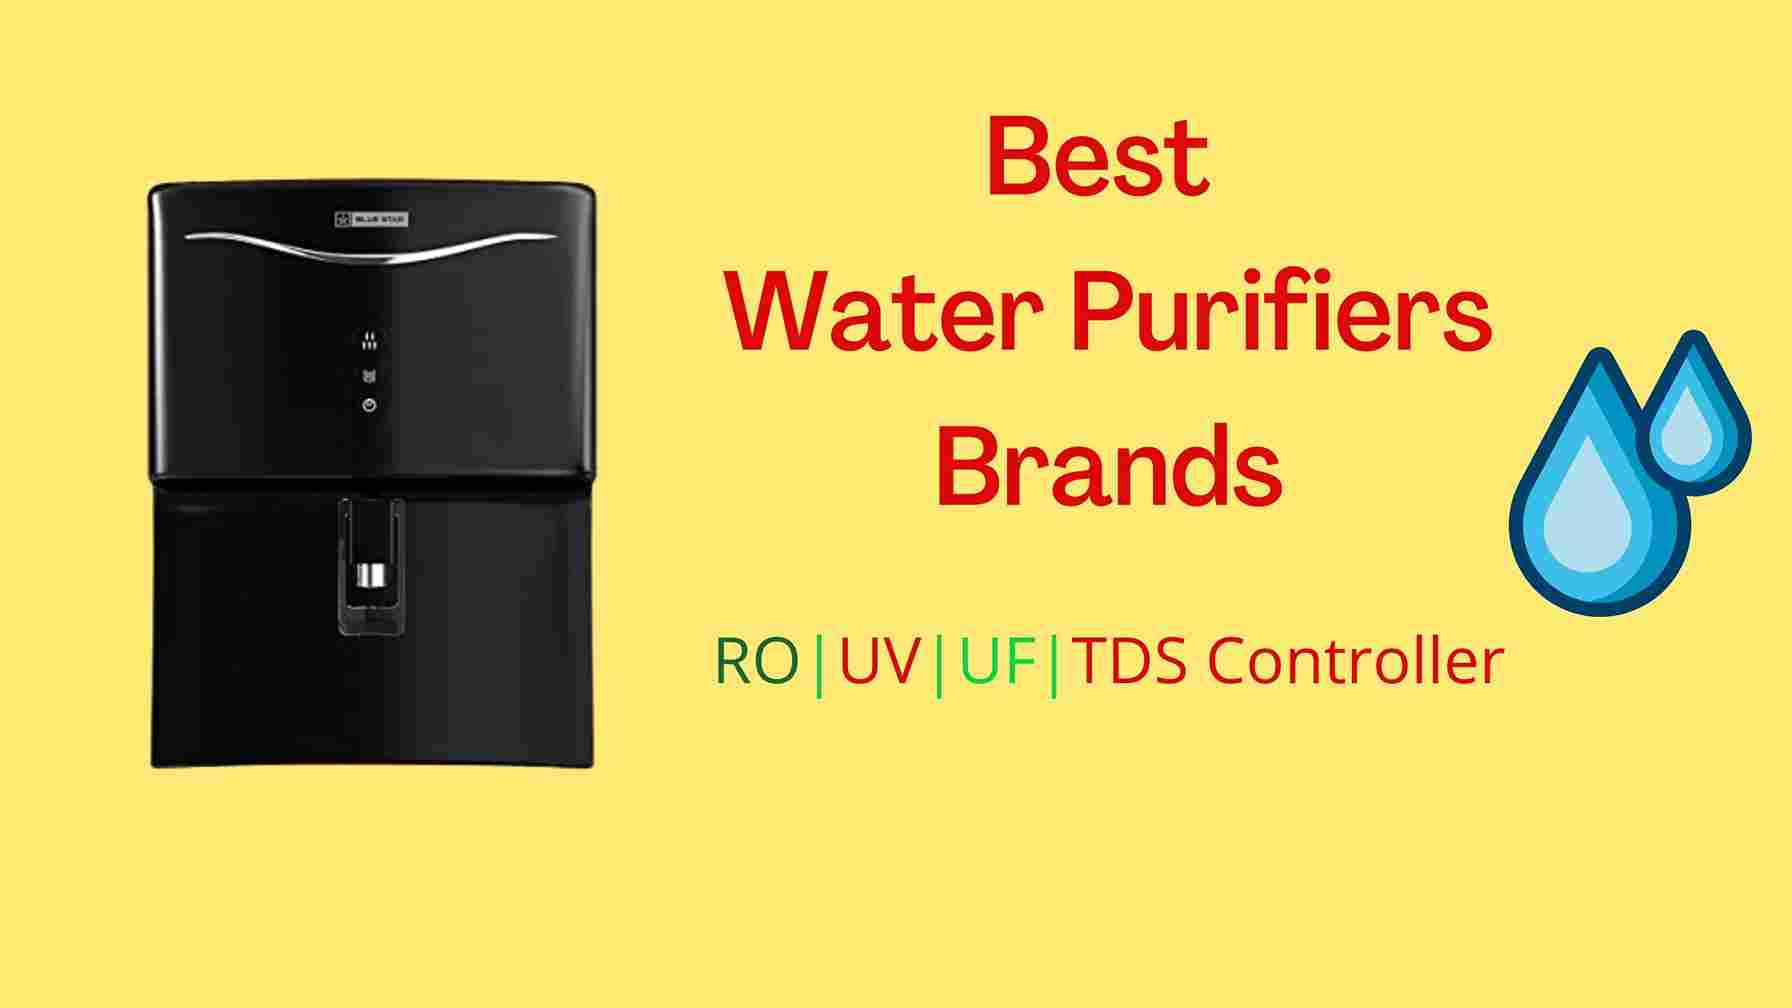 Best Water Purifier Brands in India